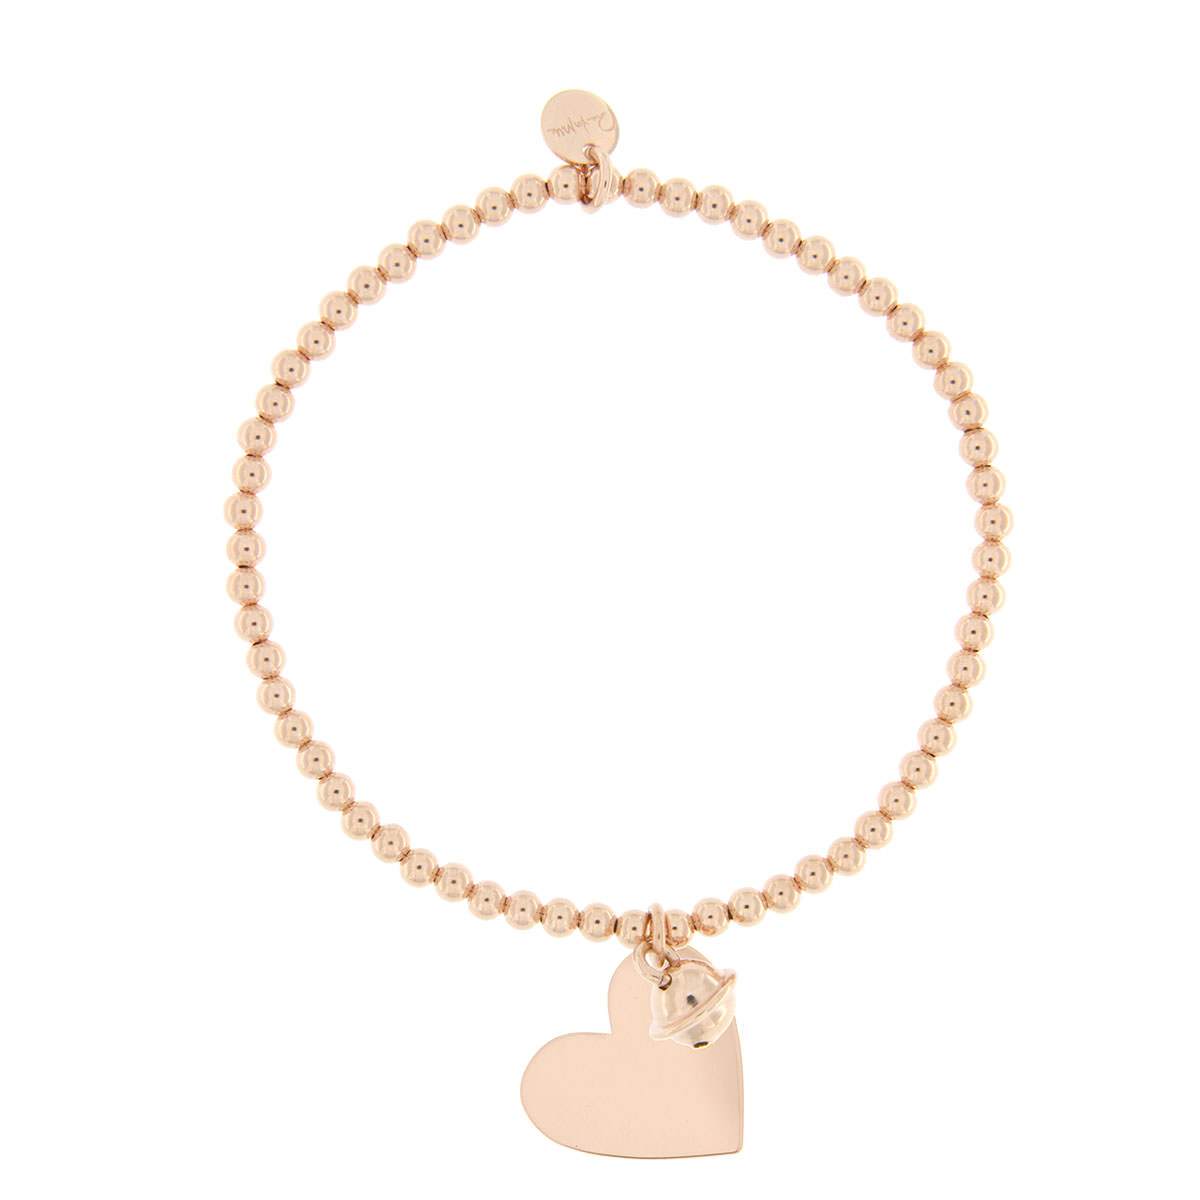 Bracelets - Beaded Stretch Bracelet with Heart Pendant - 1 | Rue des Mille